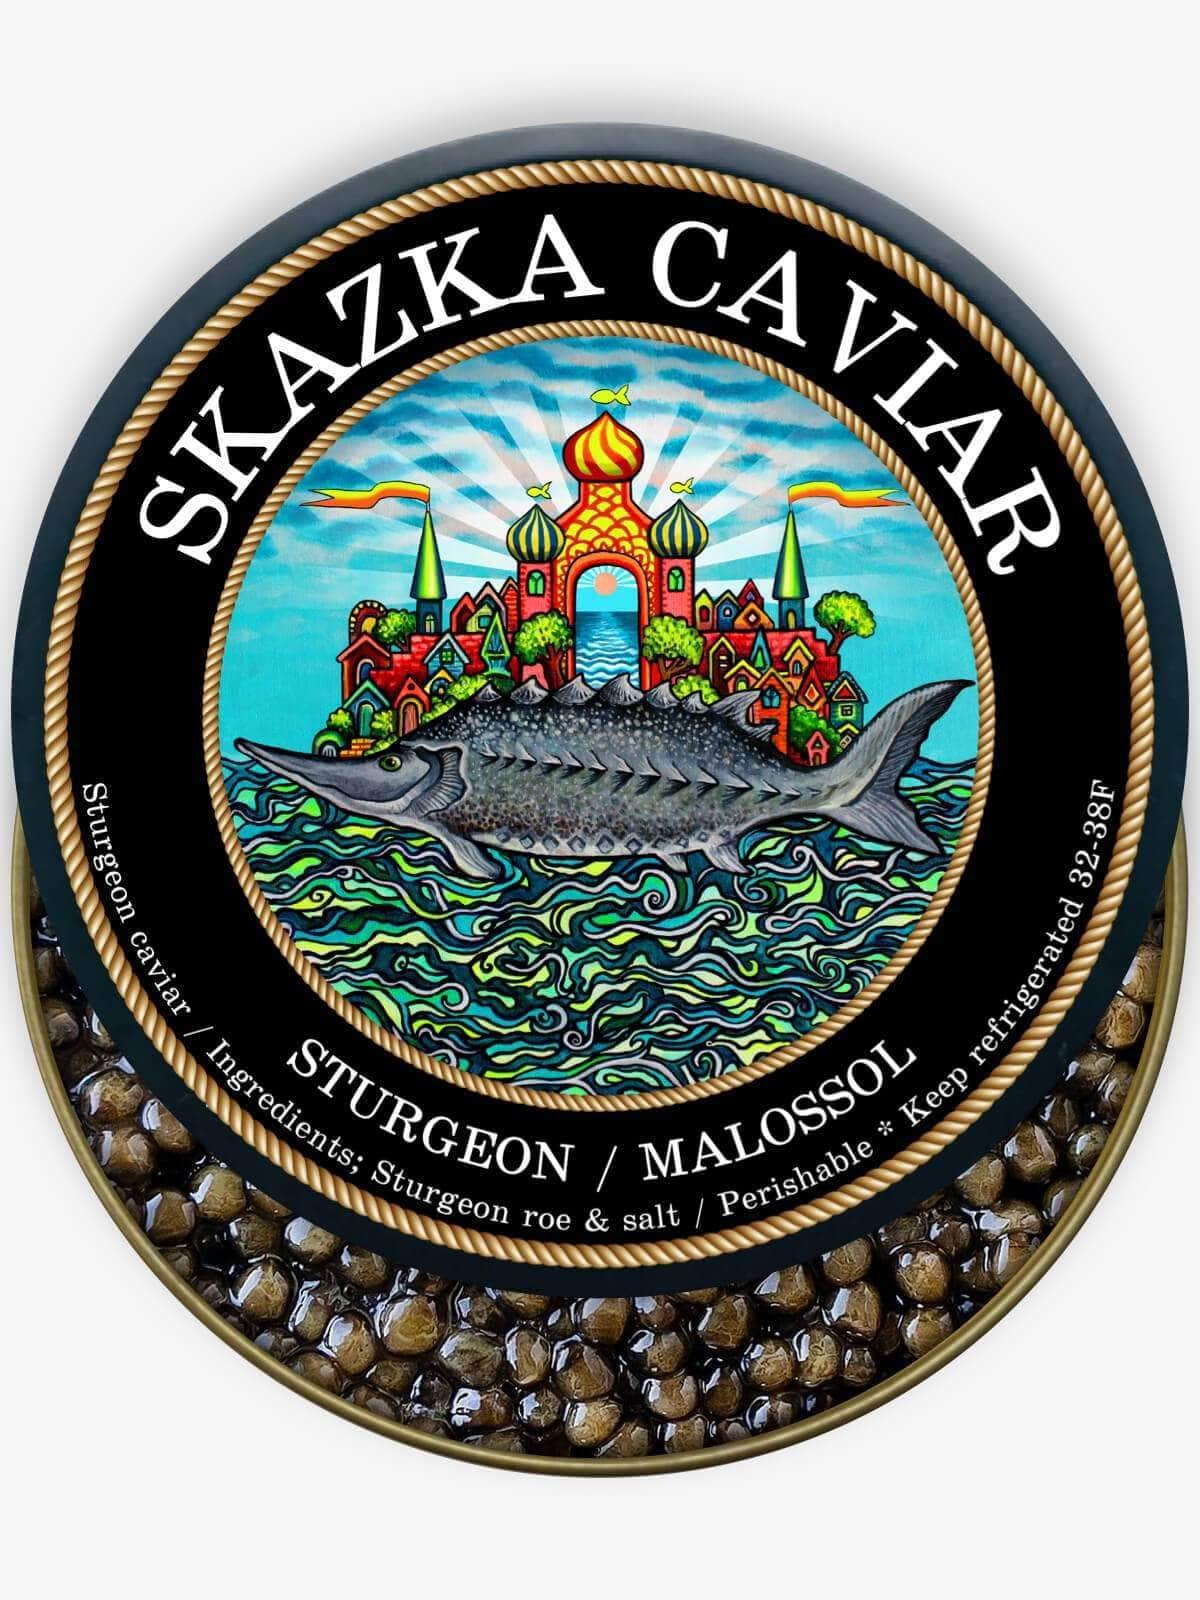 “Traditional Russian” Siberian Sturgeon Caviar - Caviar Skazka